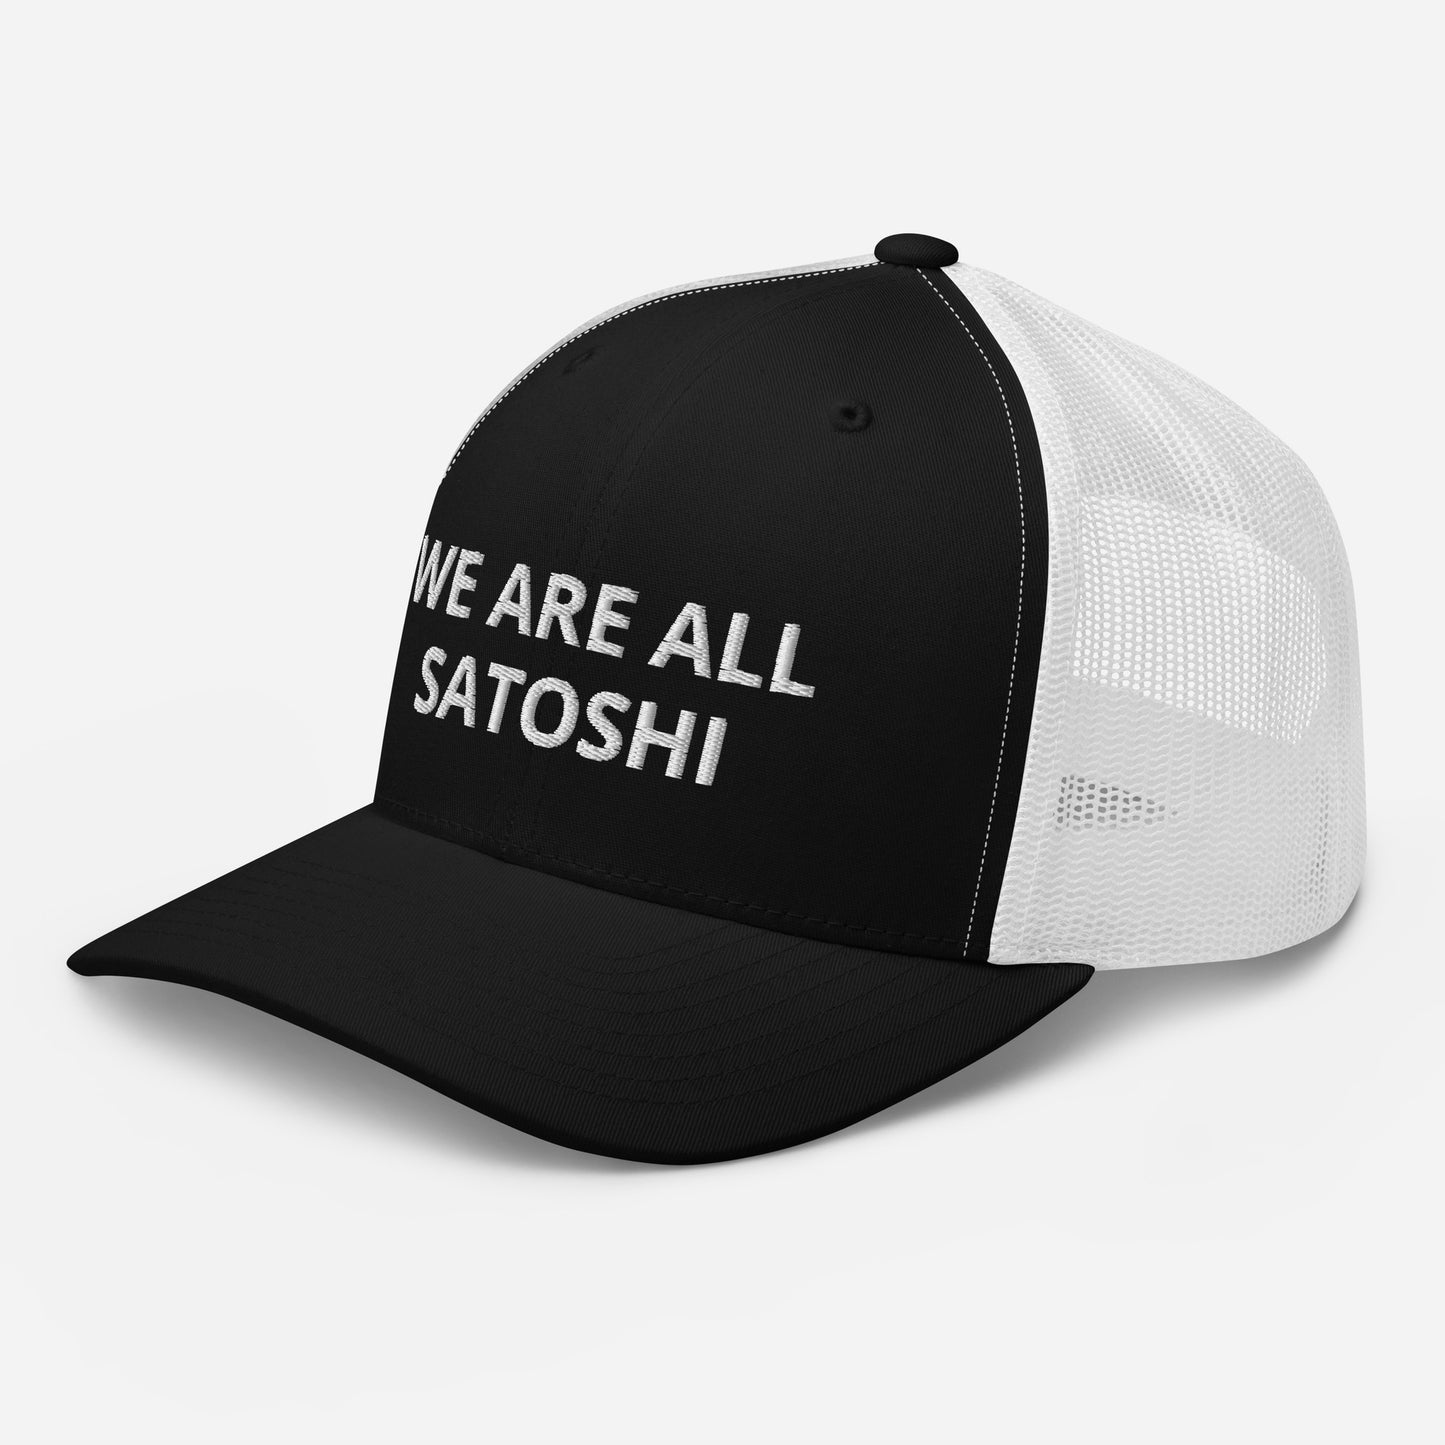 We are all satoshi Trucker Cap